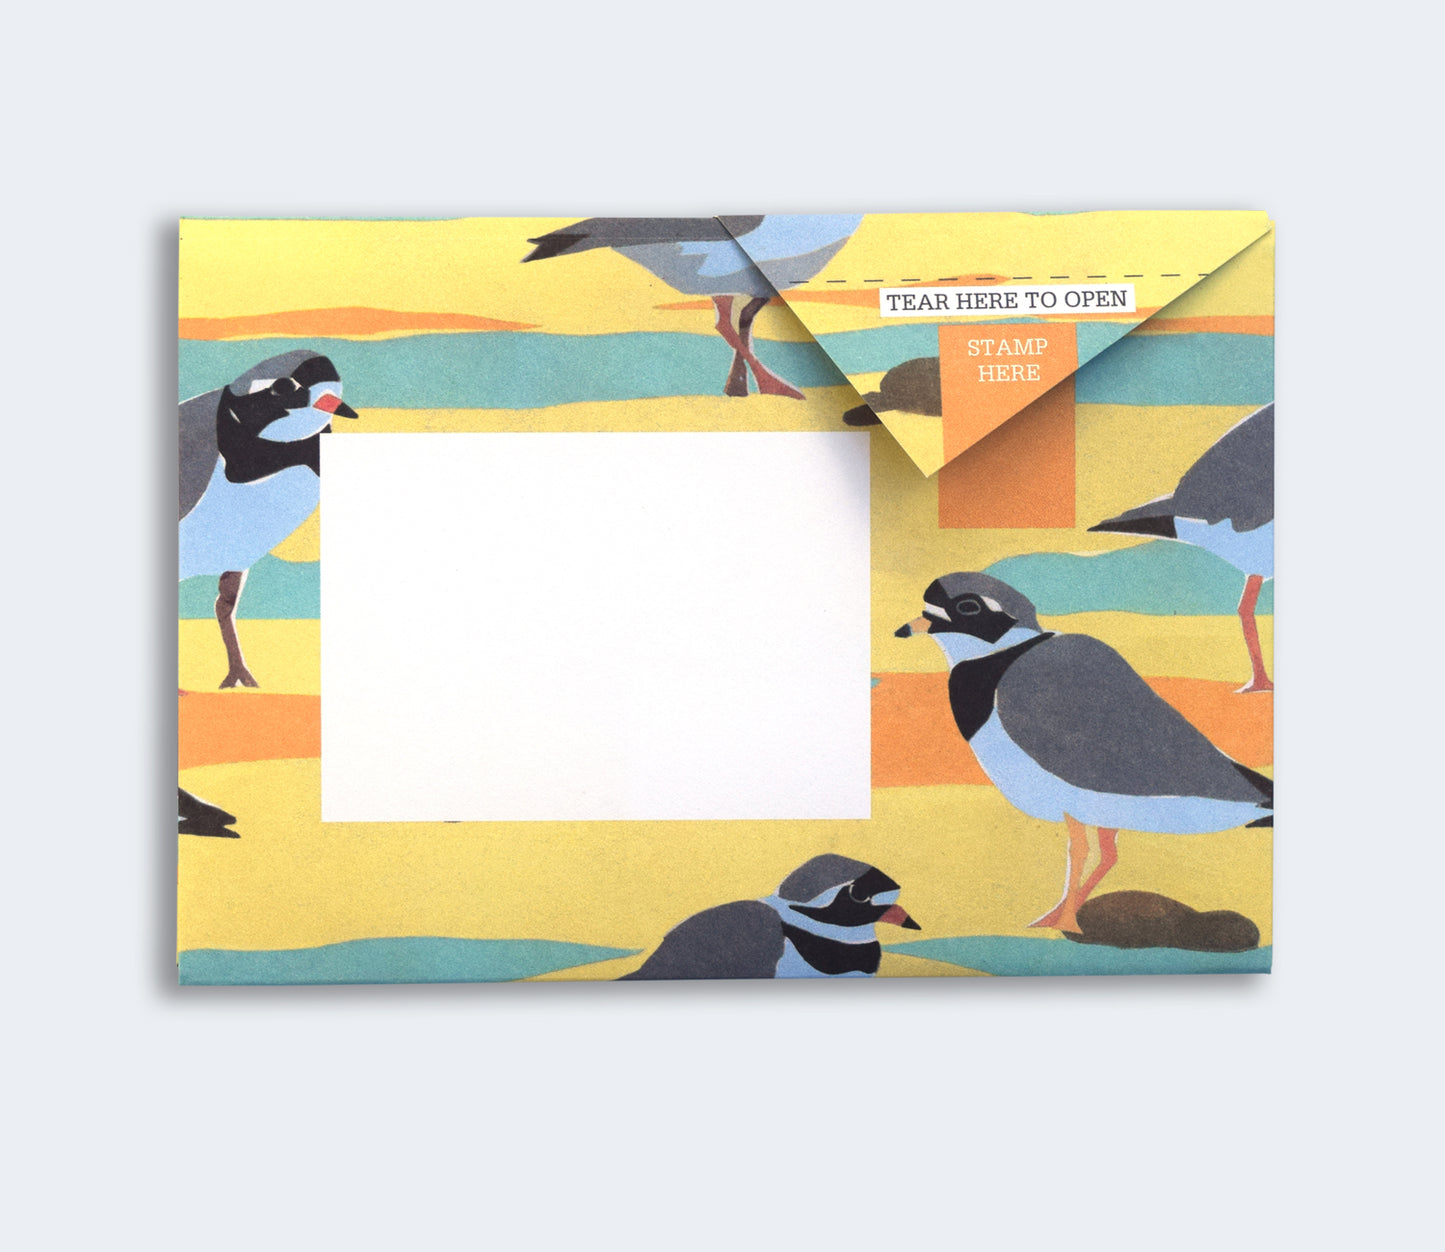 Hebridean Pigeon Letter Writing Set